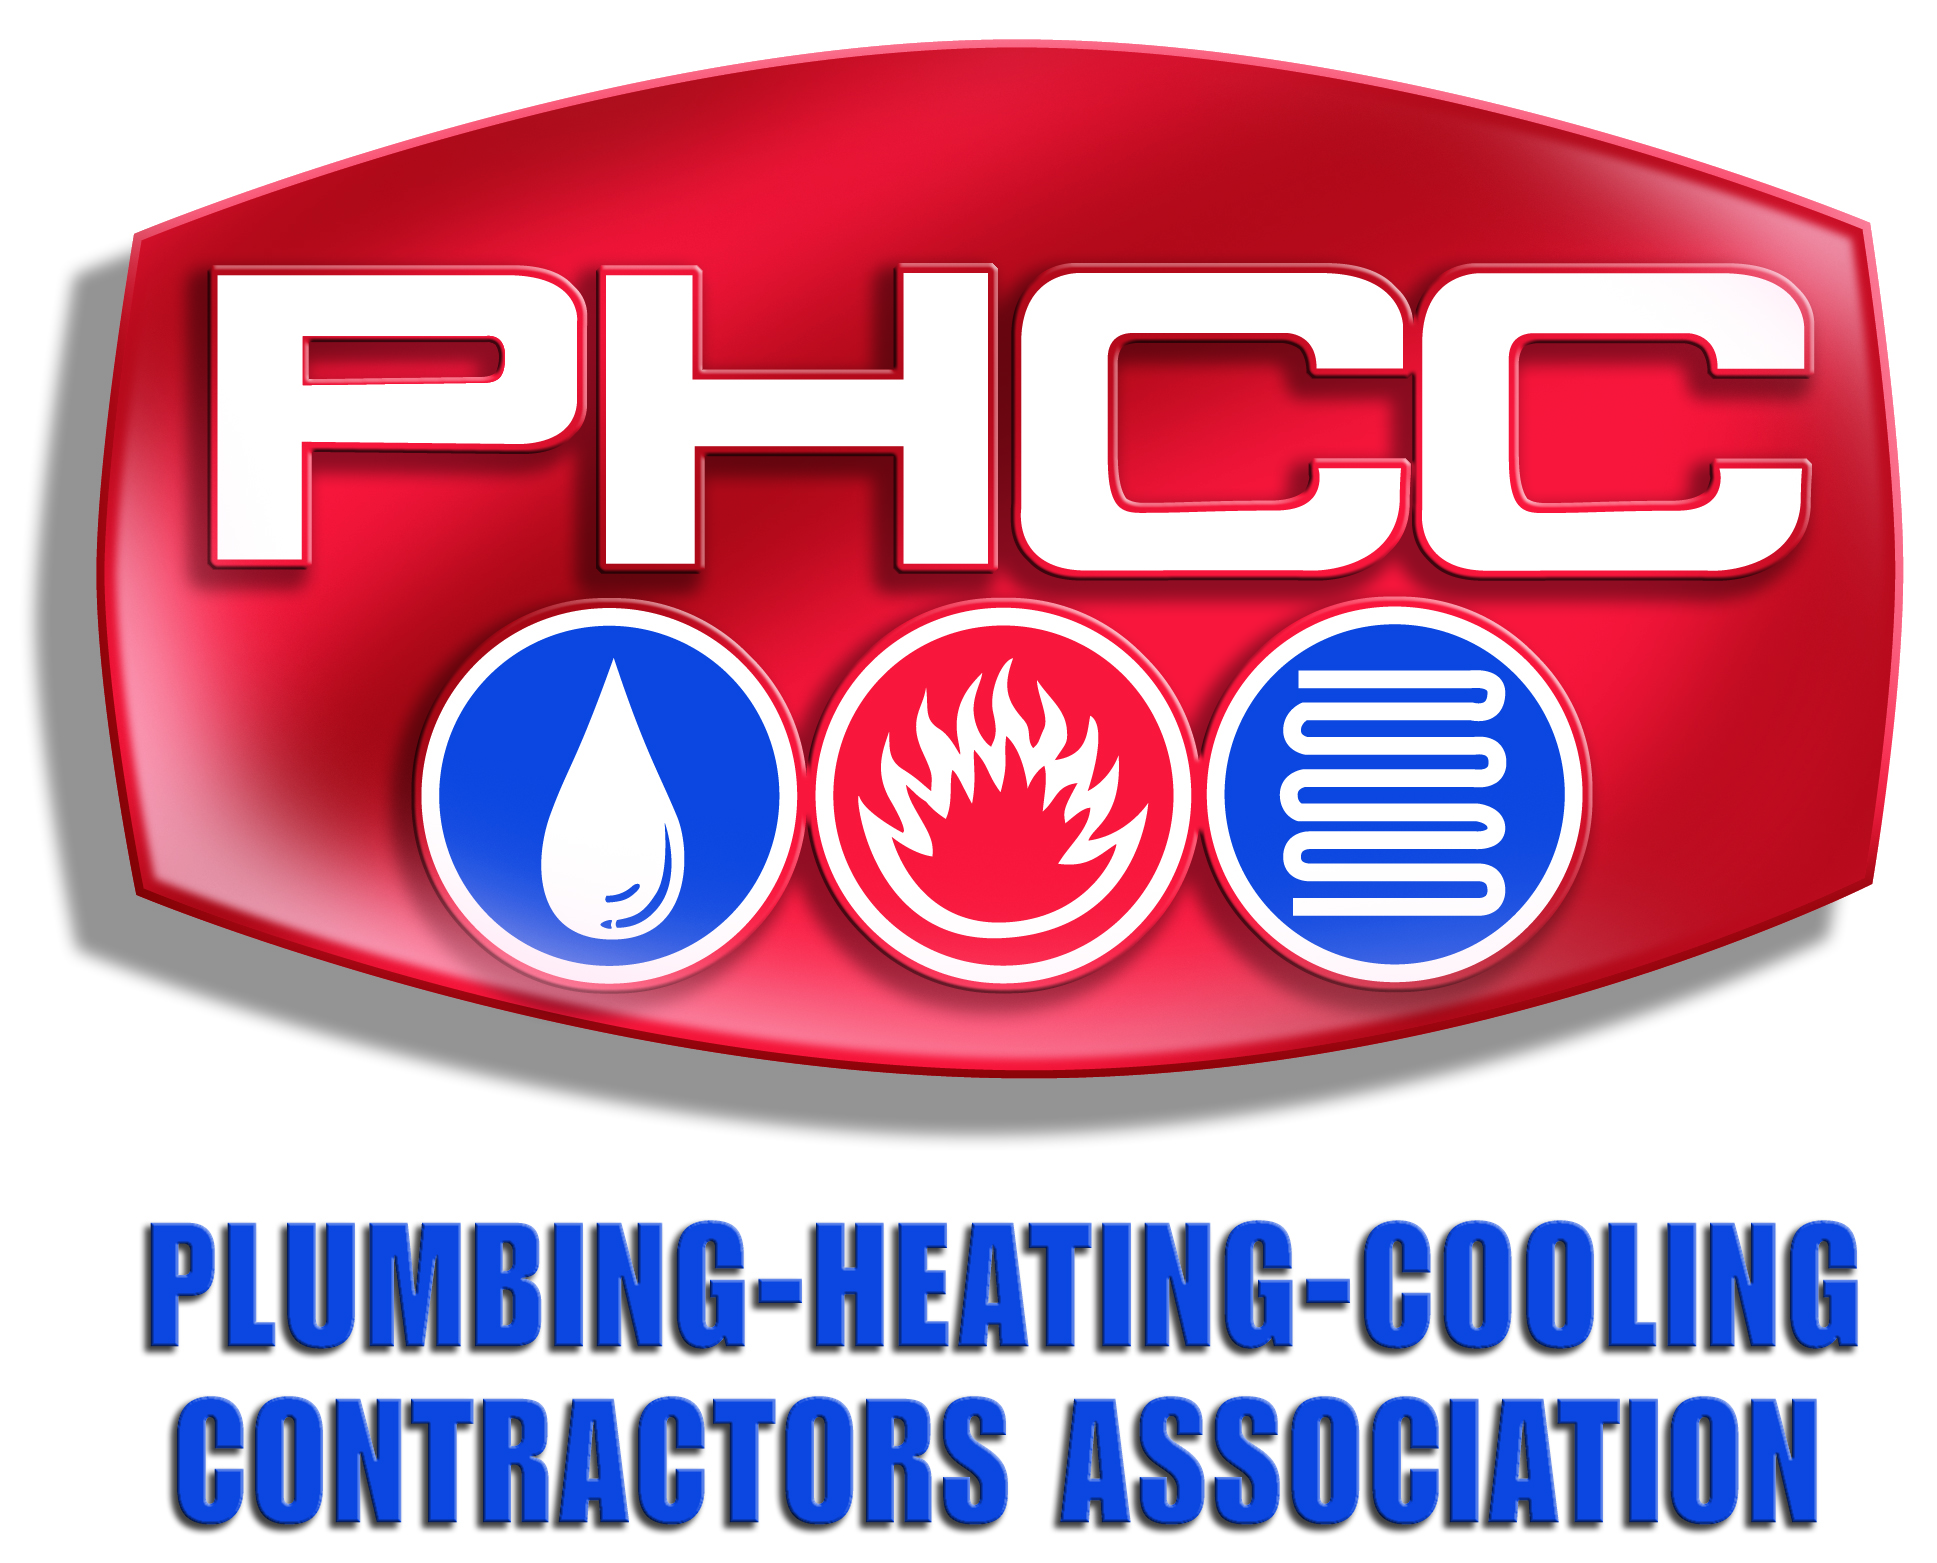 Plumbing- Heating Cooling Contractors Association (PHCC)